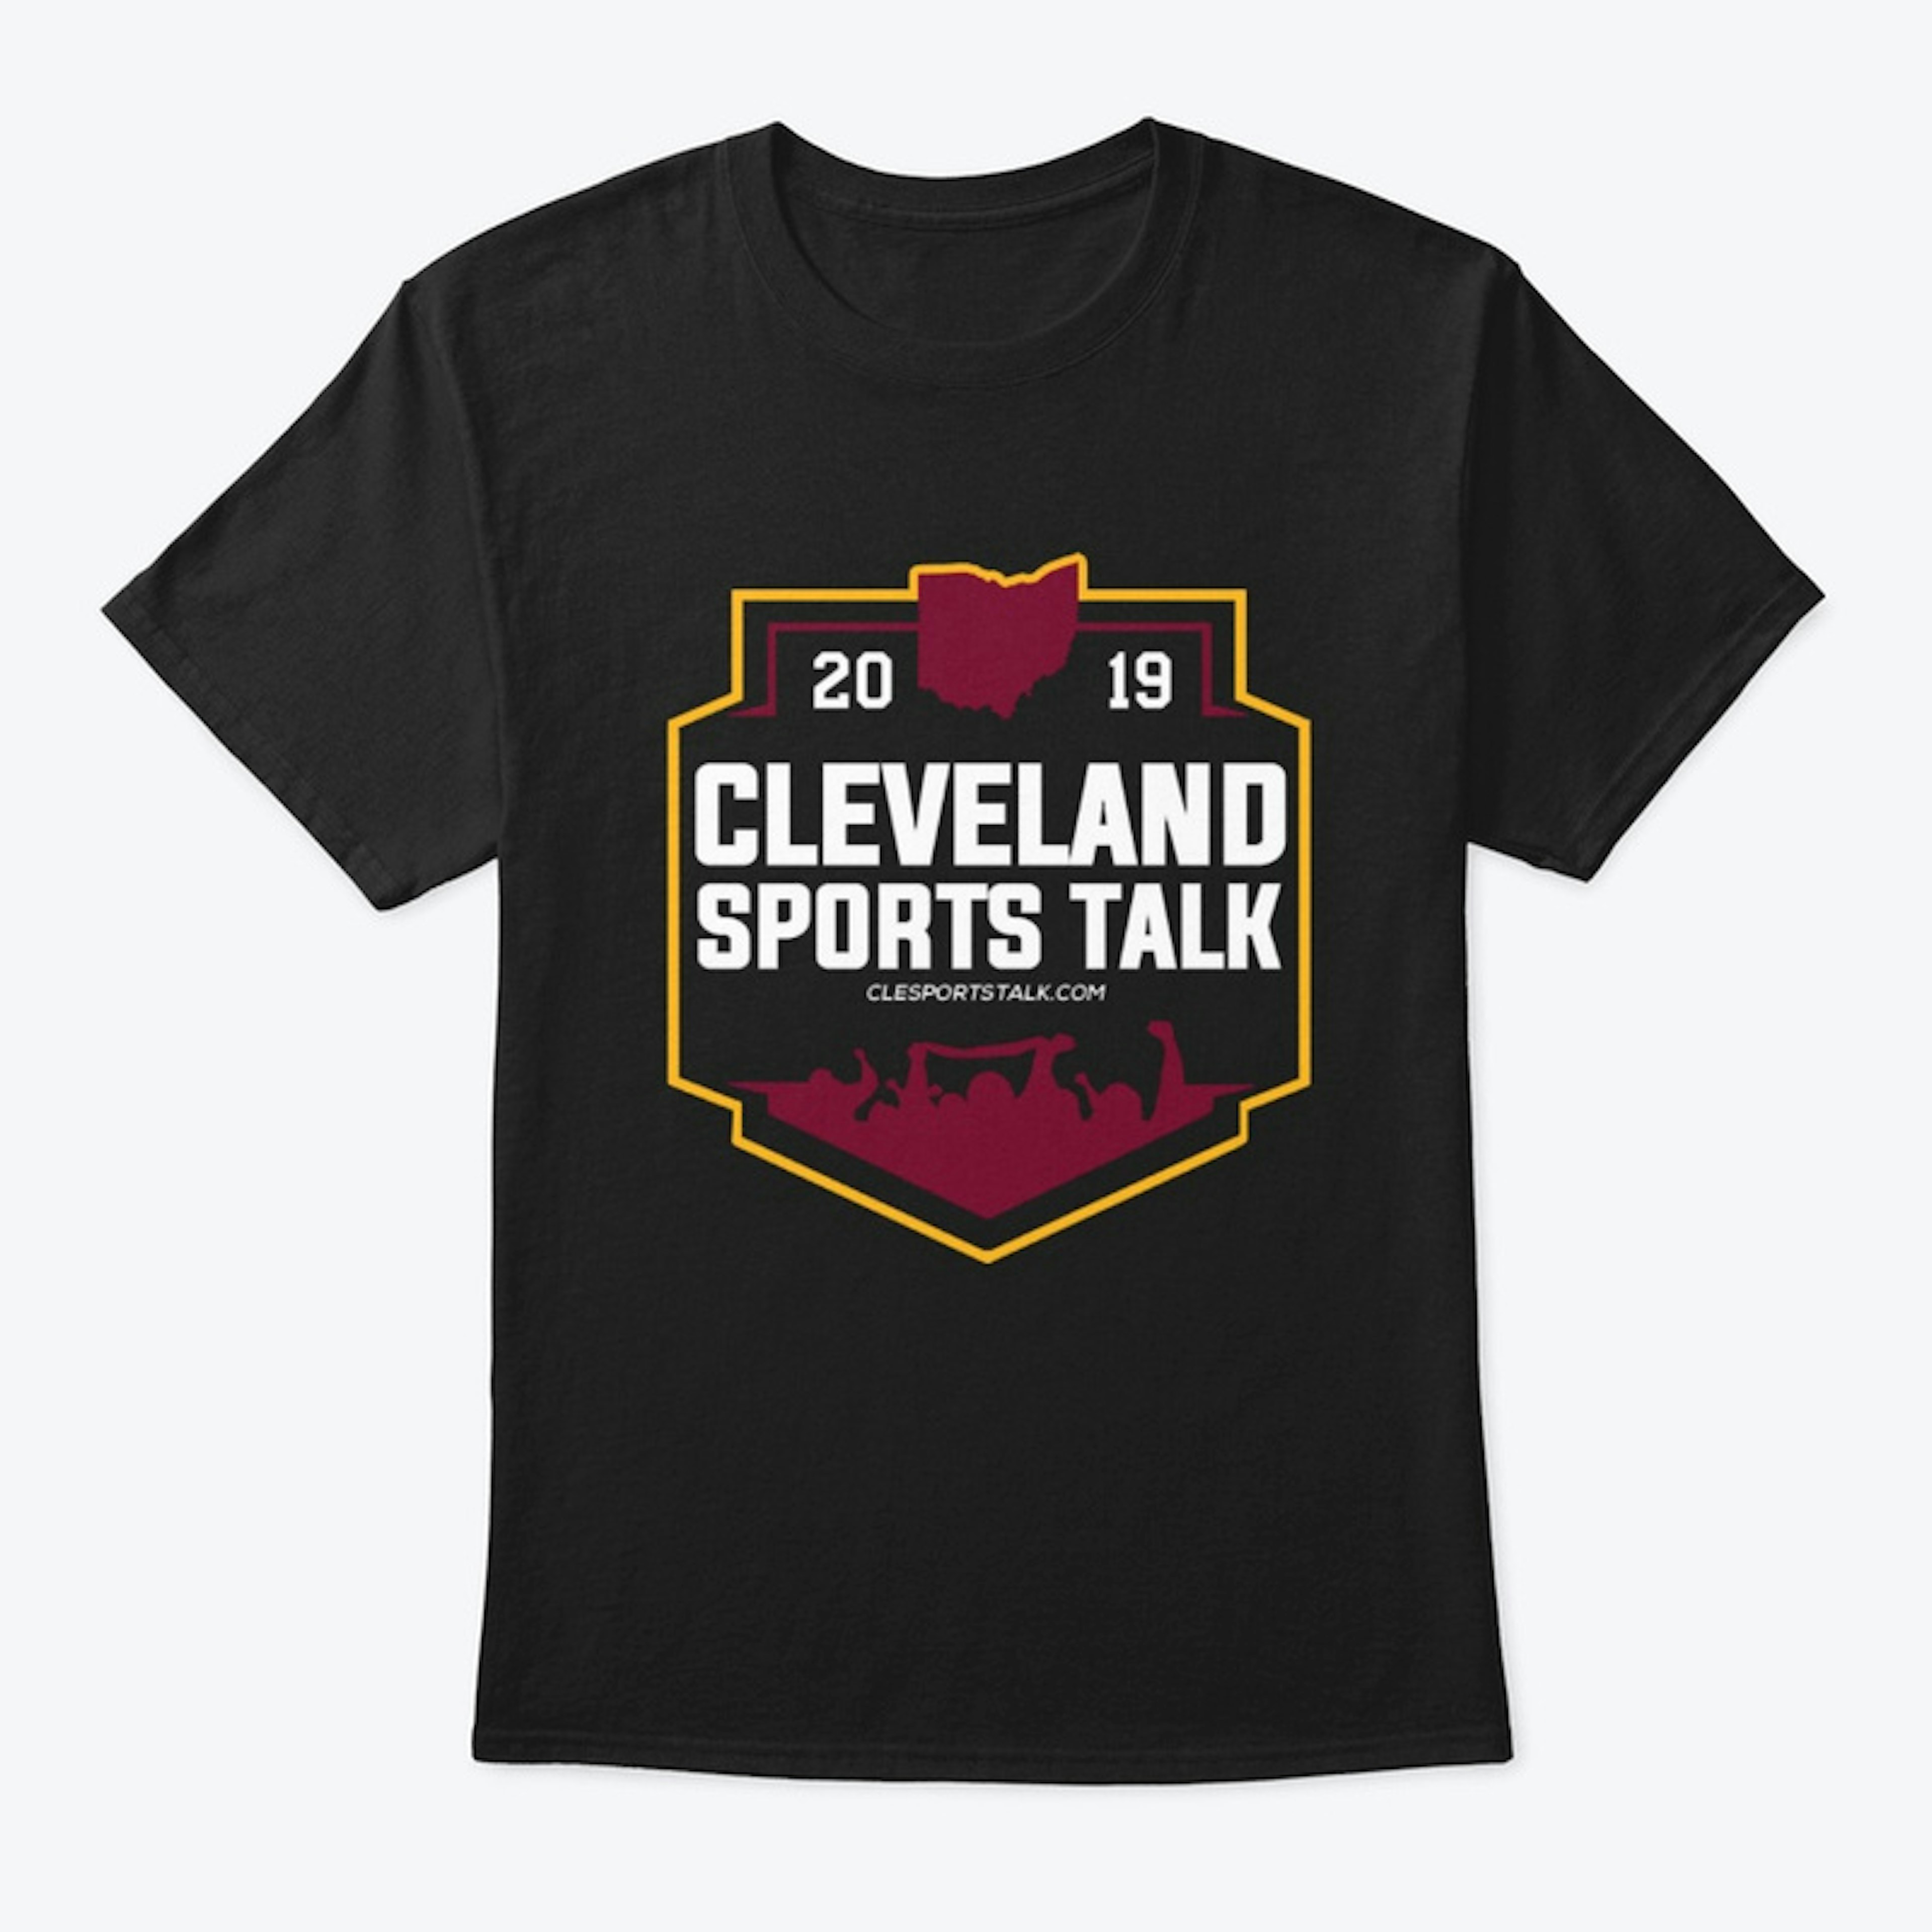  Cleveland Sports Talk 